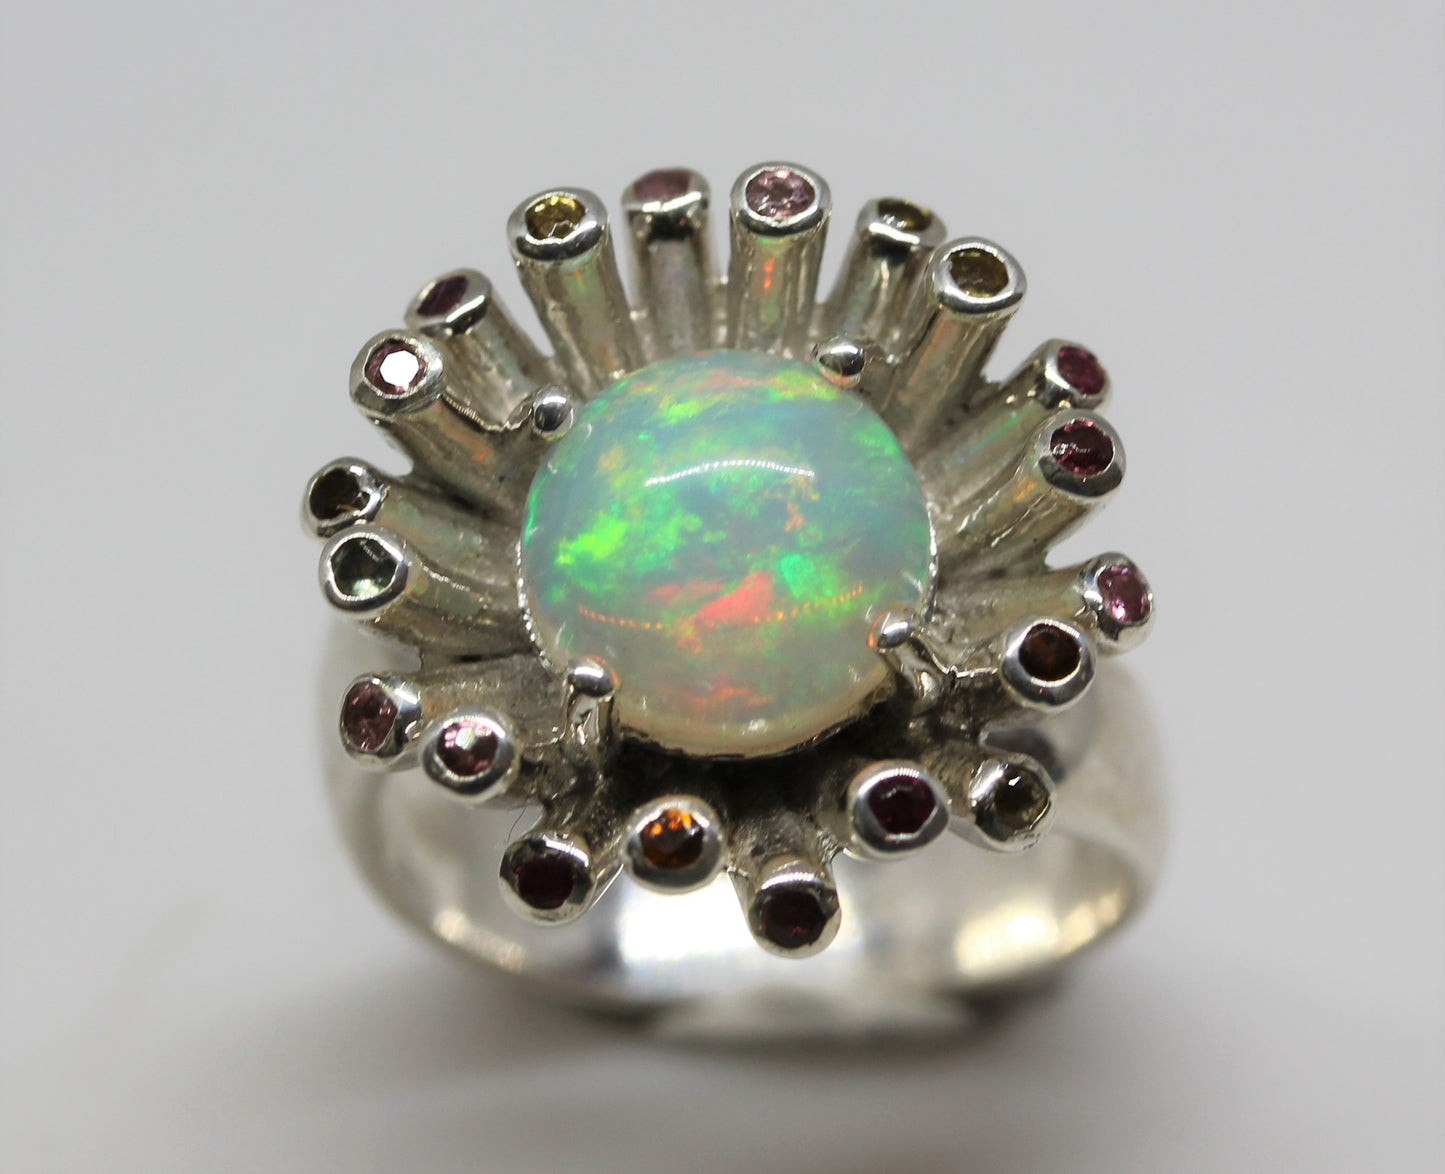 Opal & Tourmaline Starburst  Ring - Adjustable Size - Sterling Silver - #271